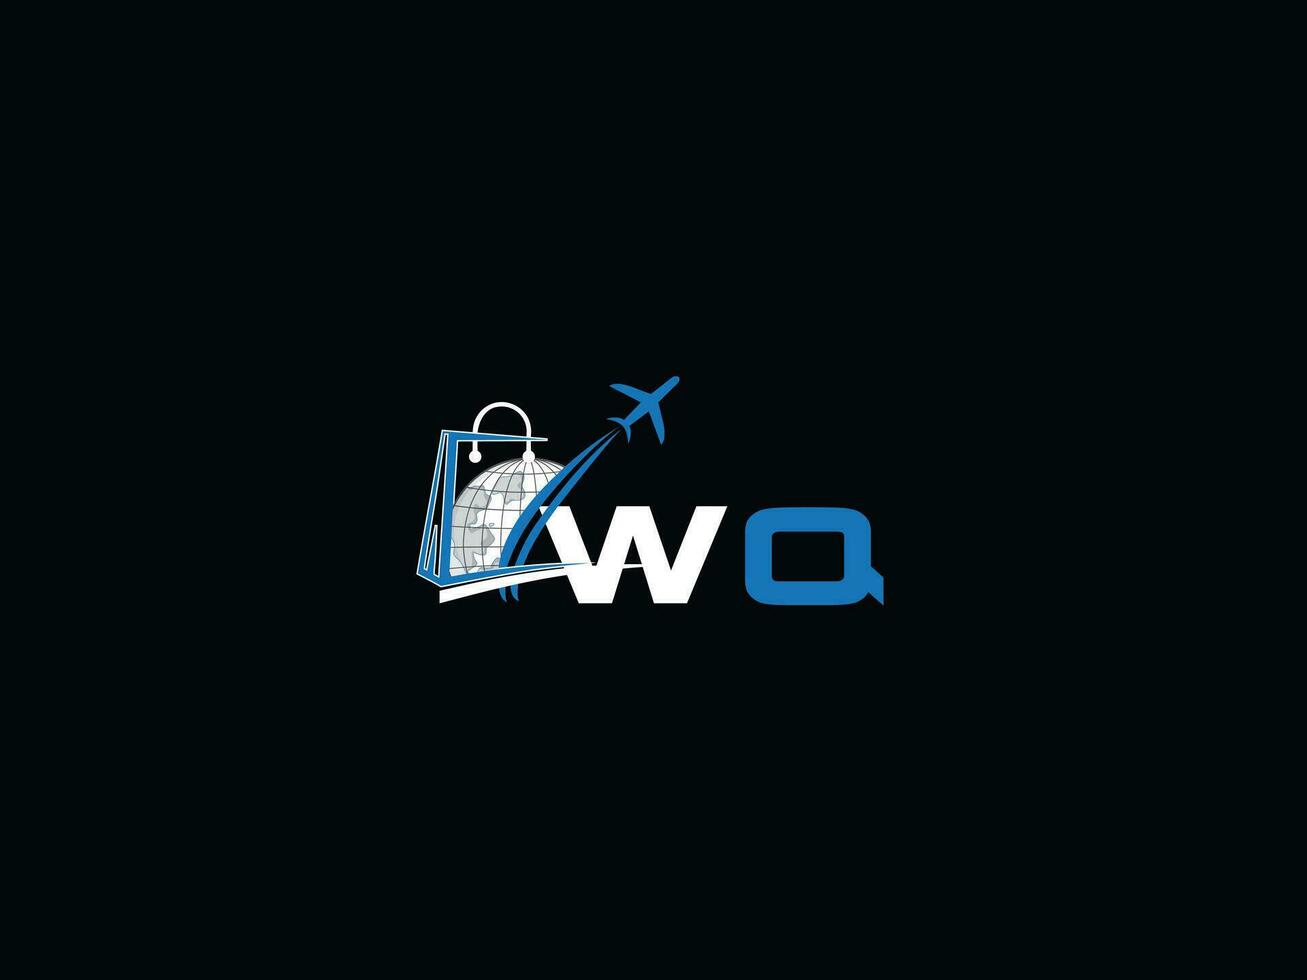 único aire viaje wq logo icono, creativo global wq inicial de viaje logo letra vector